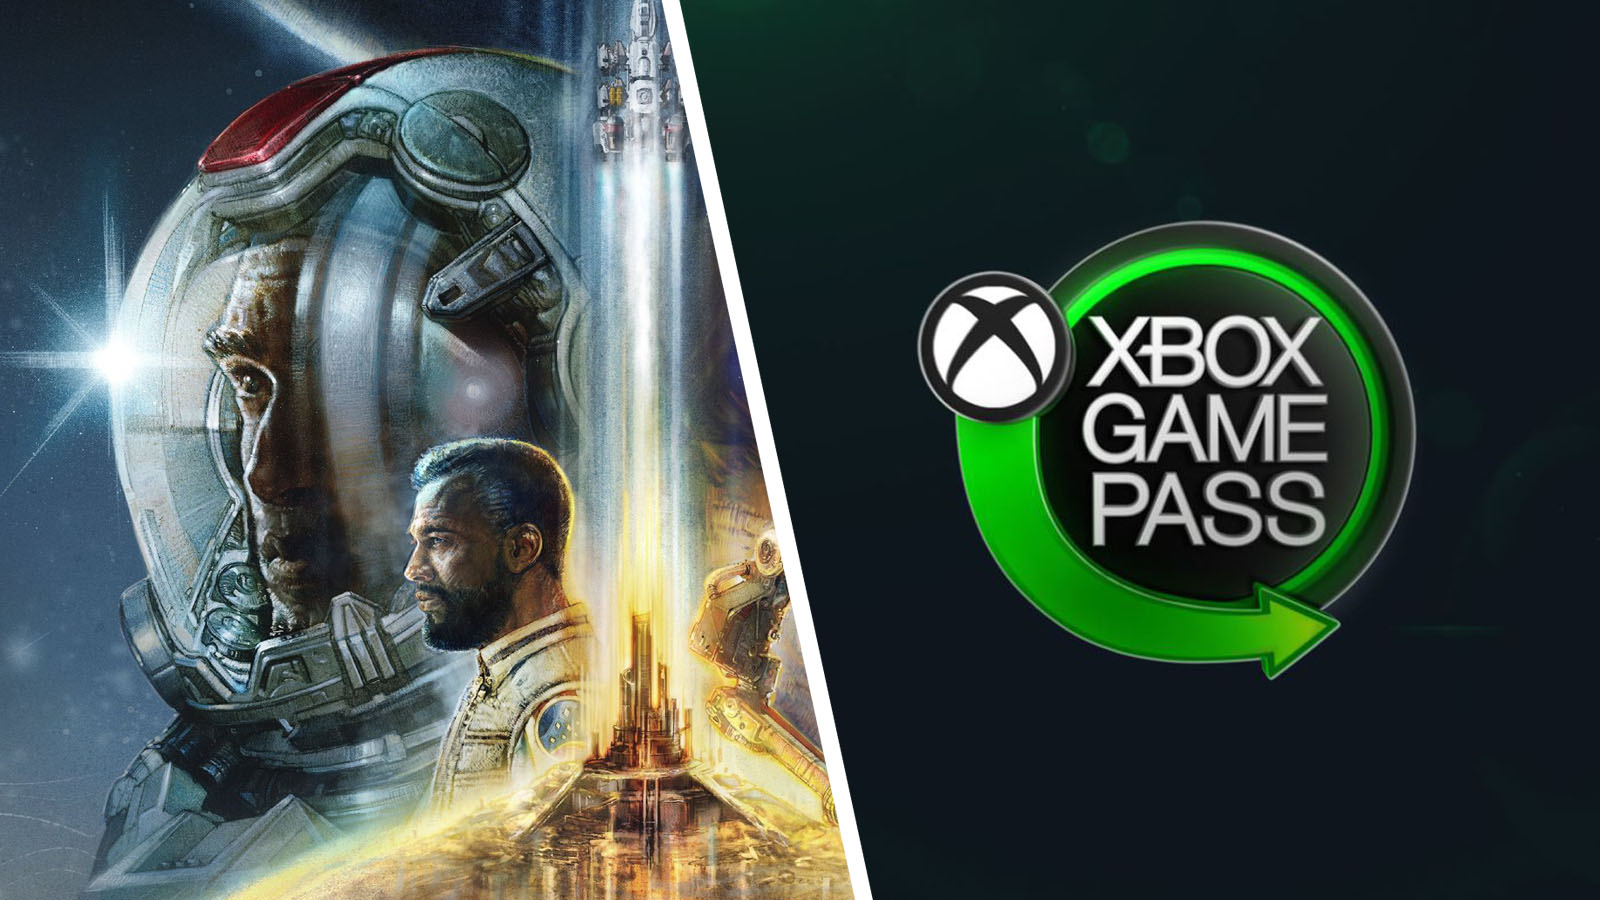 Apa Starfield on Gambar Promosi Xbox Game Pass